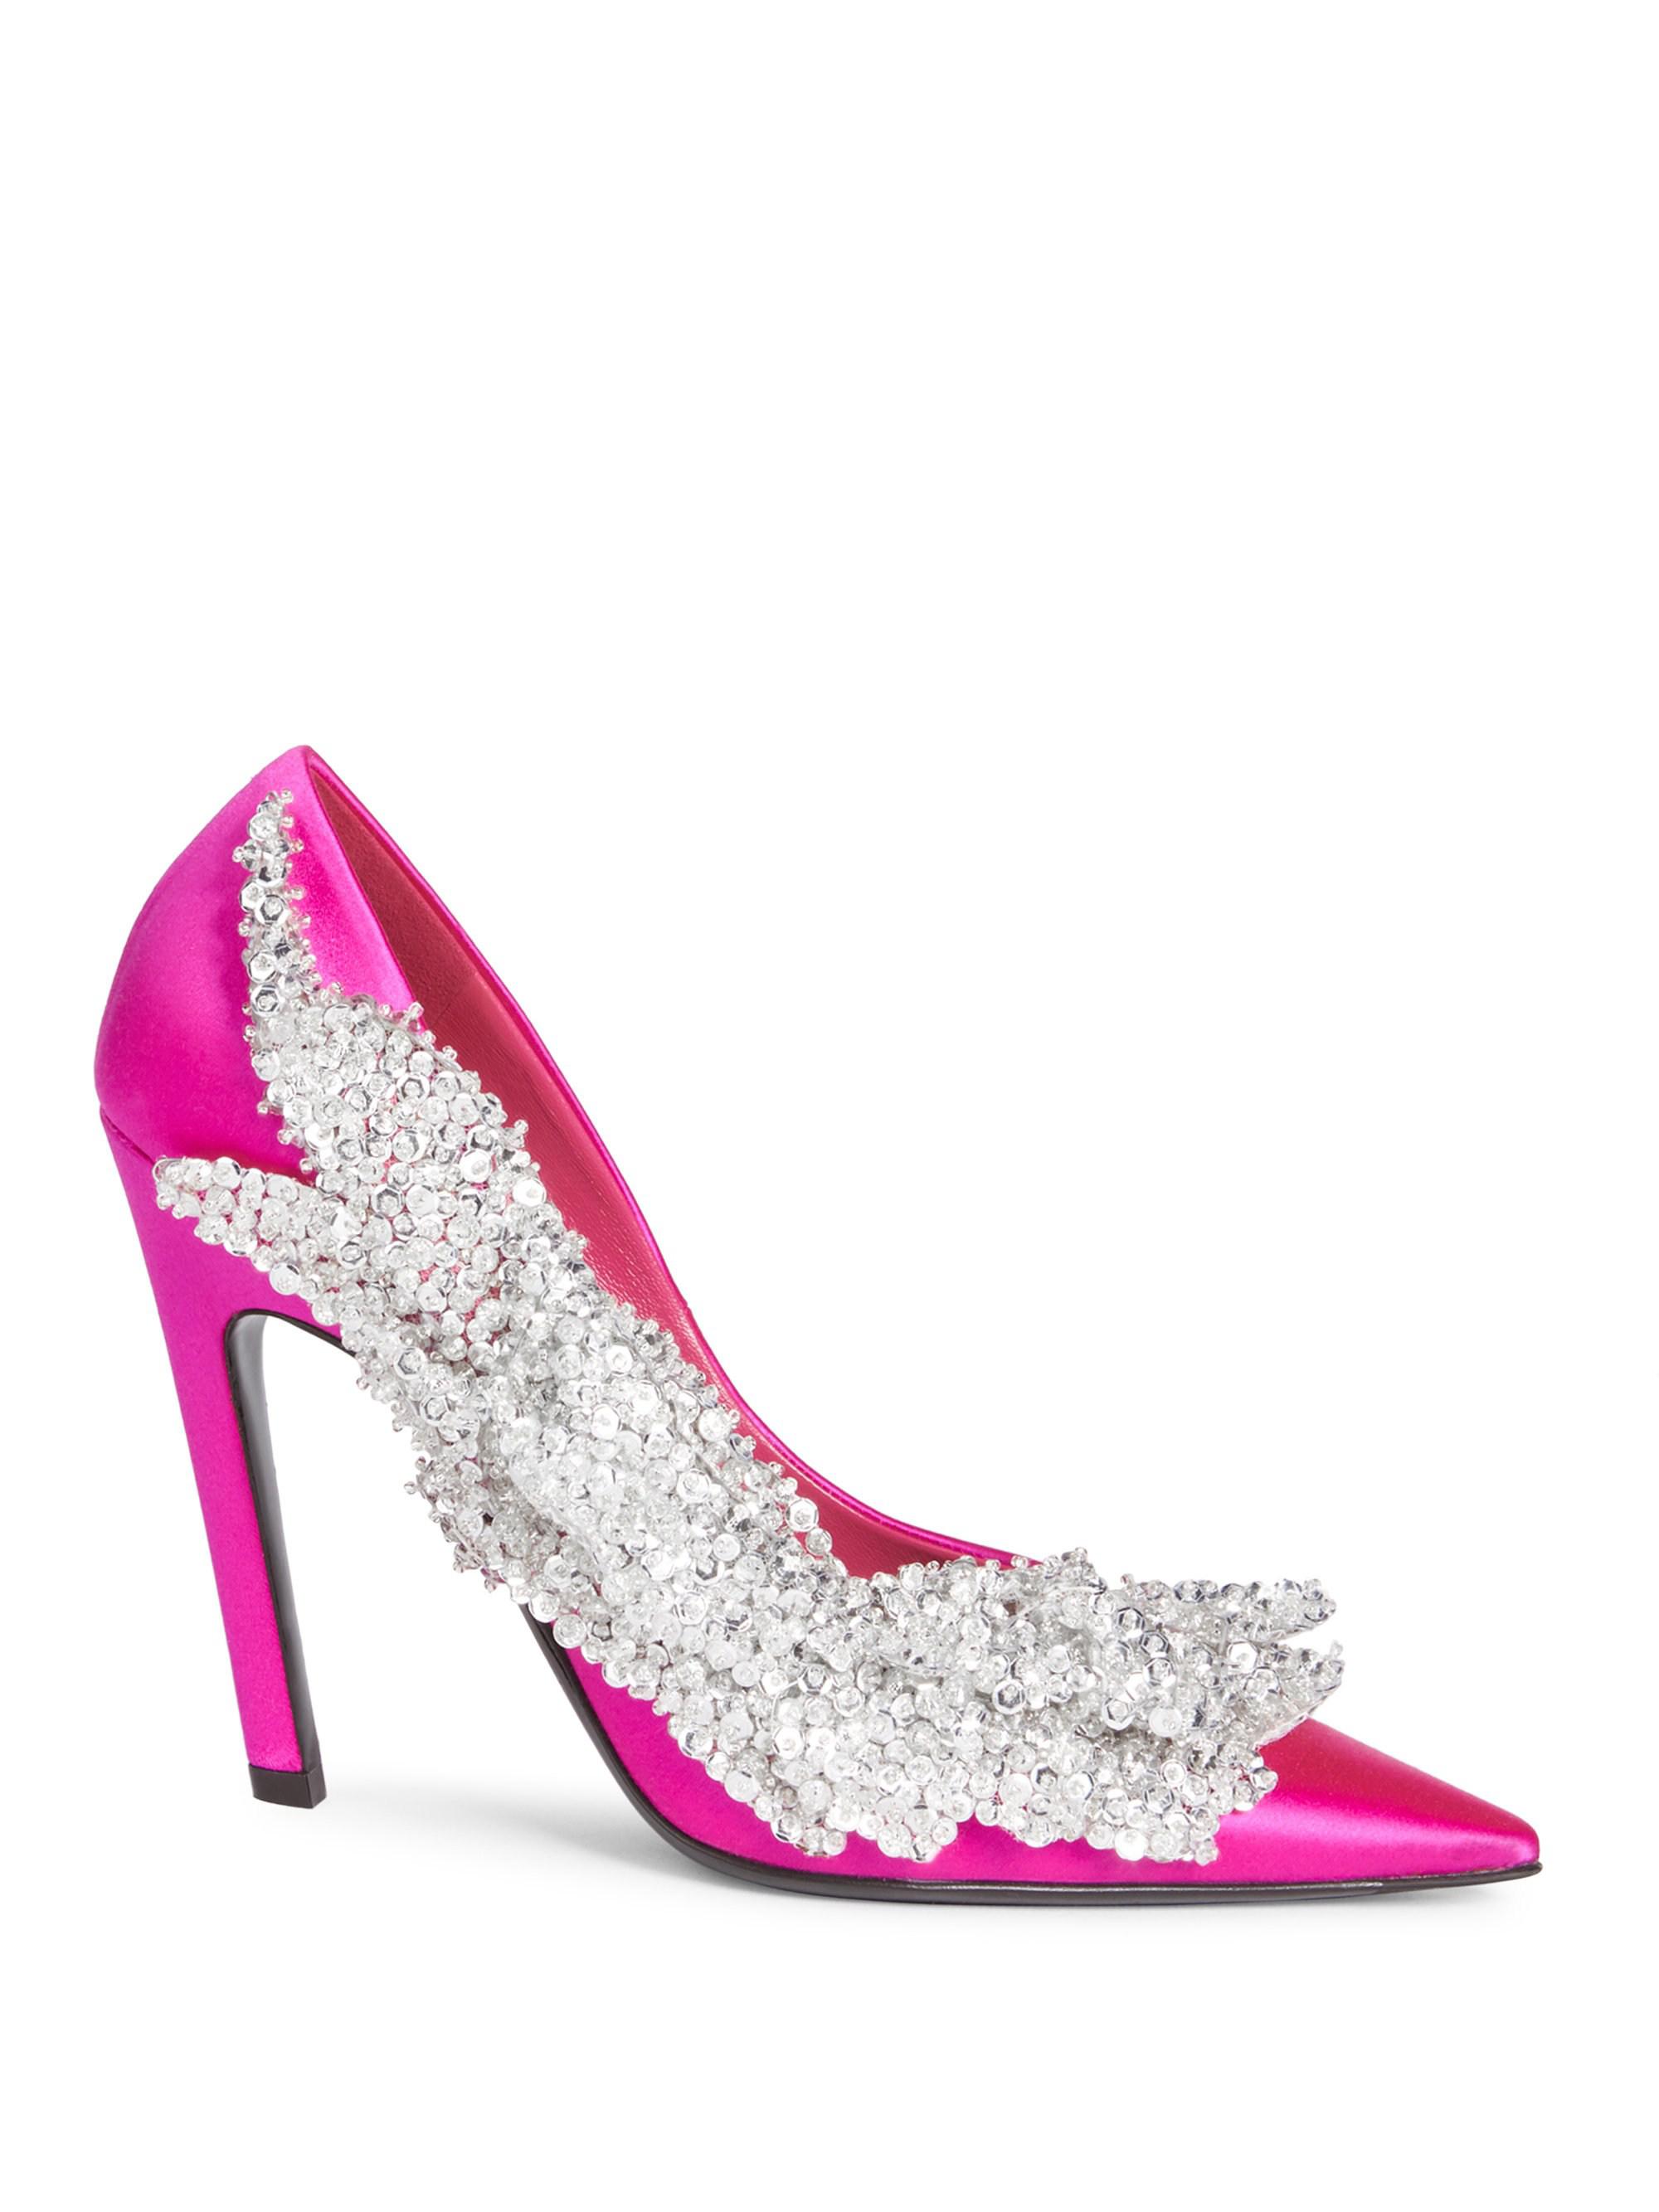 Balenciaga Crystal Satin Pumps in Pink - Lyst